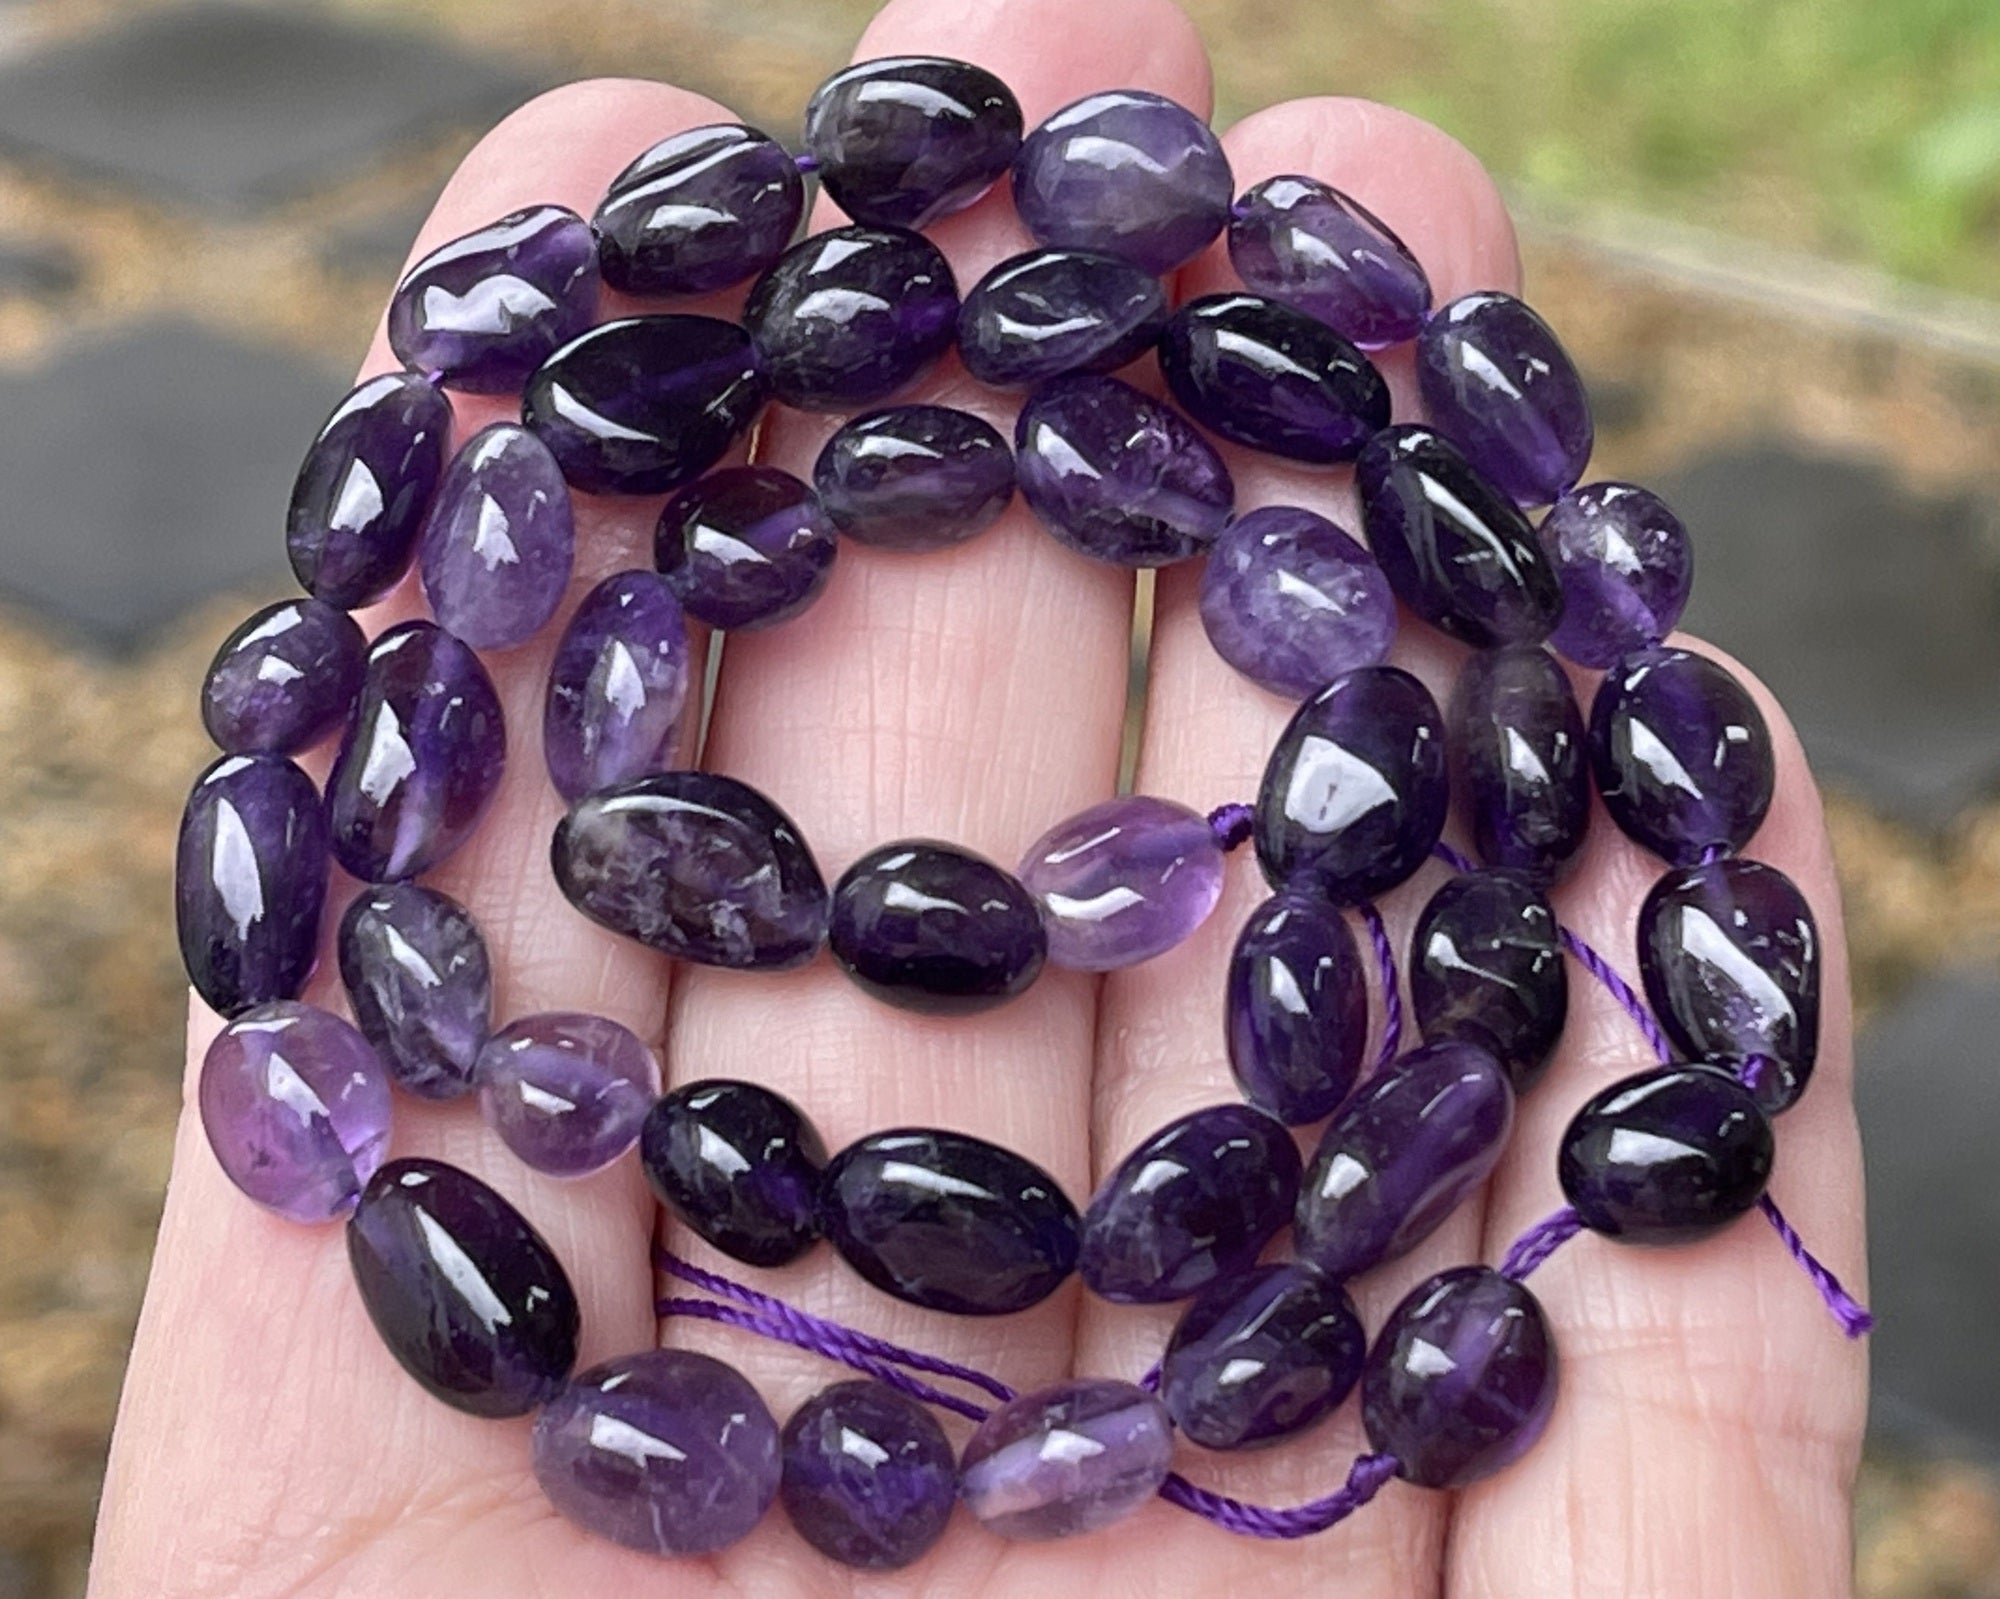 Amethyst 8-11mm nuggets natural gemstone pebble beads 16" strand